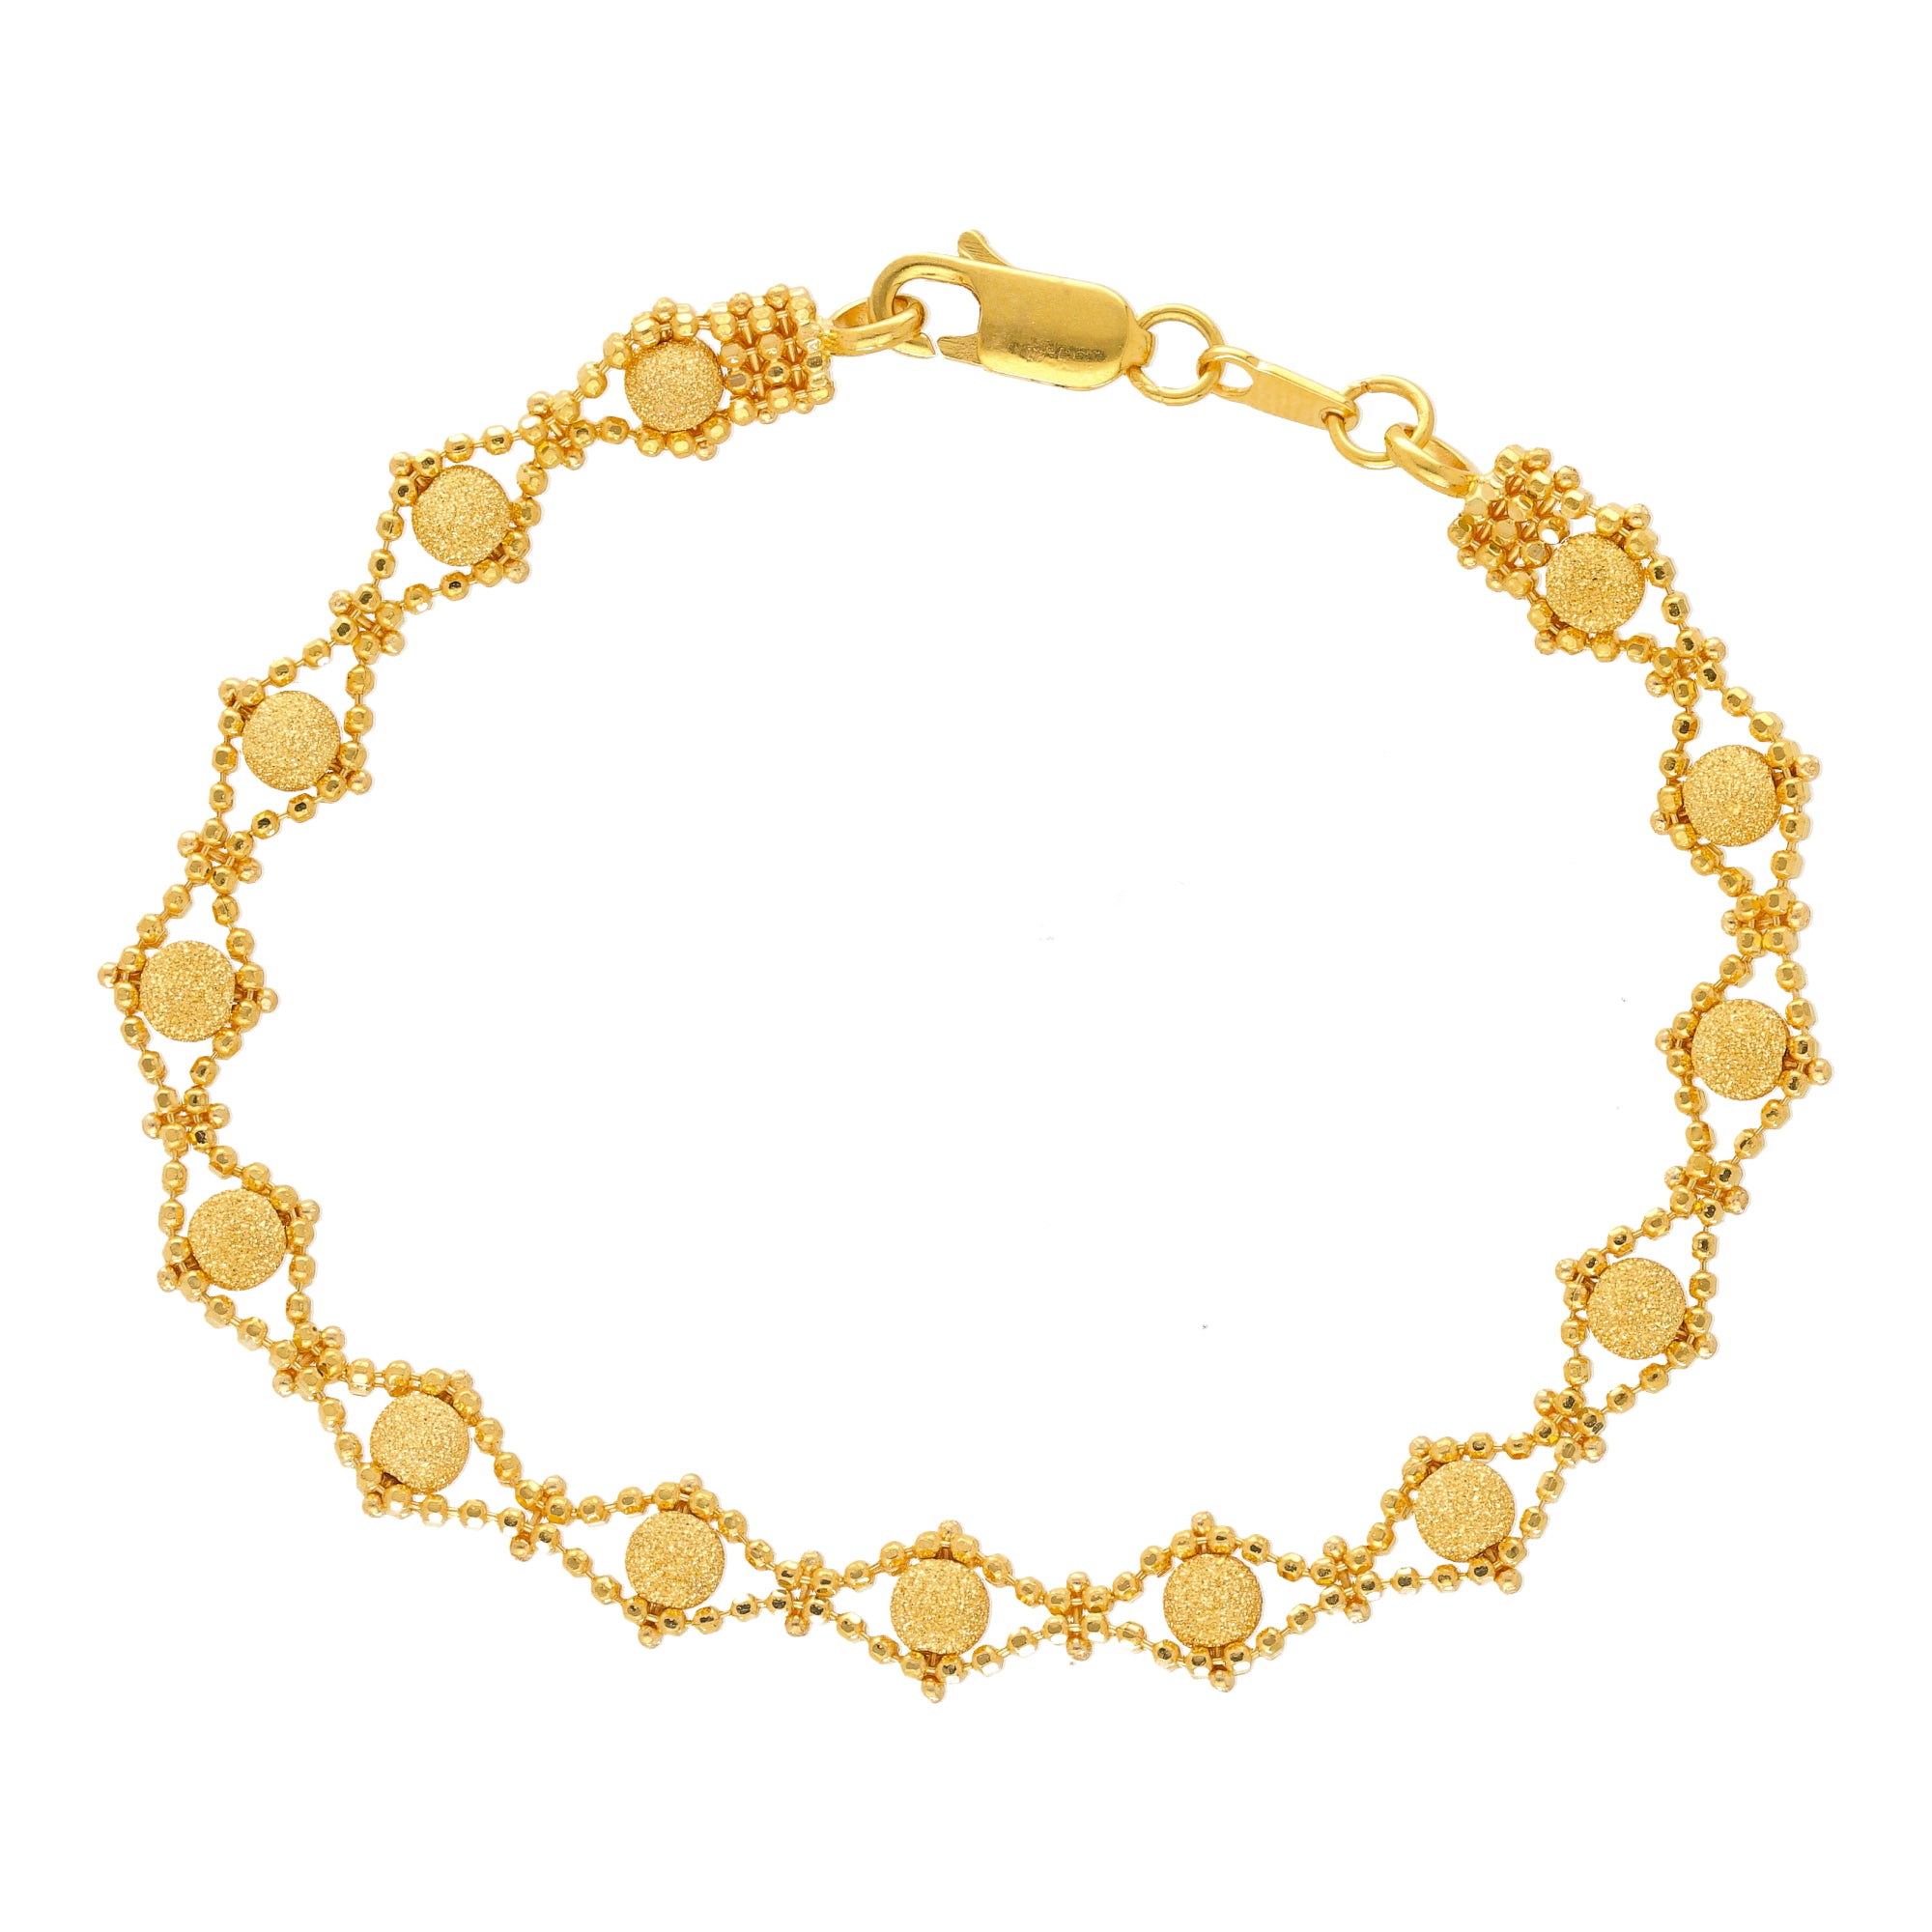 Buy Latest Stone Bracelet Stylish Gold Bracelet Designs for Girls